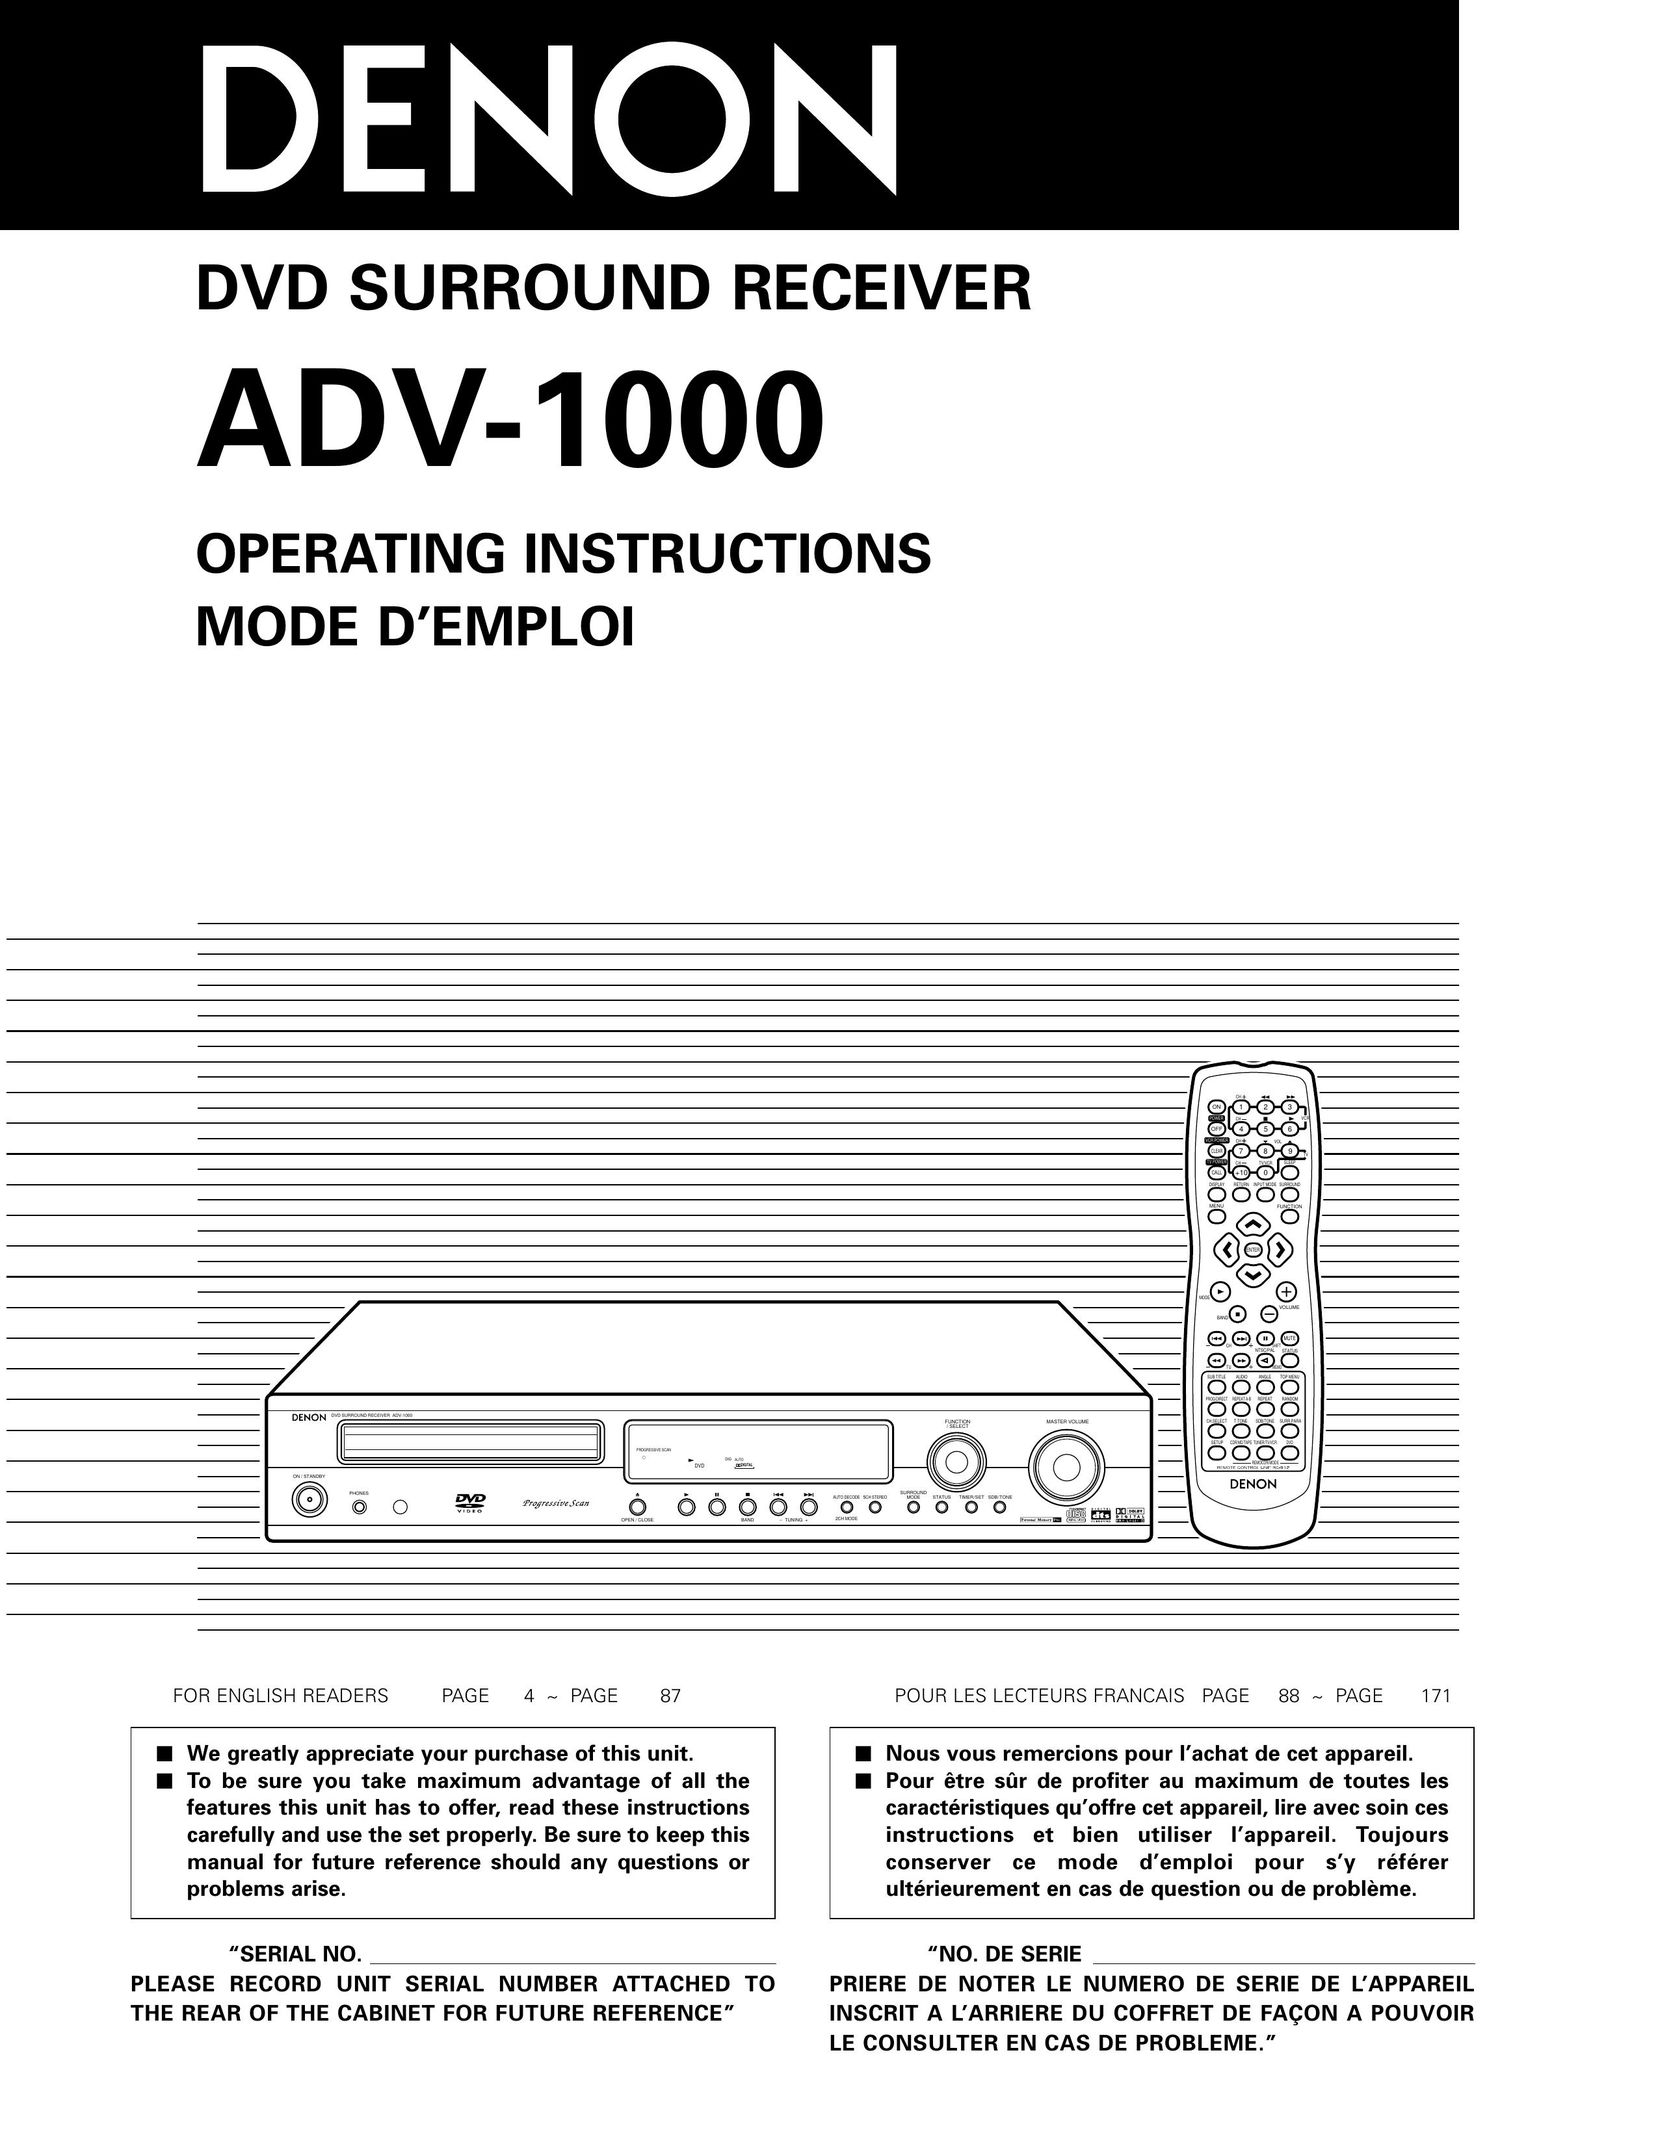 Denon ADV-1000 DVD Player User Manual